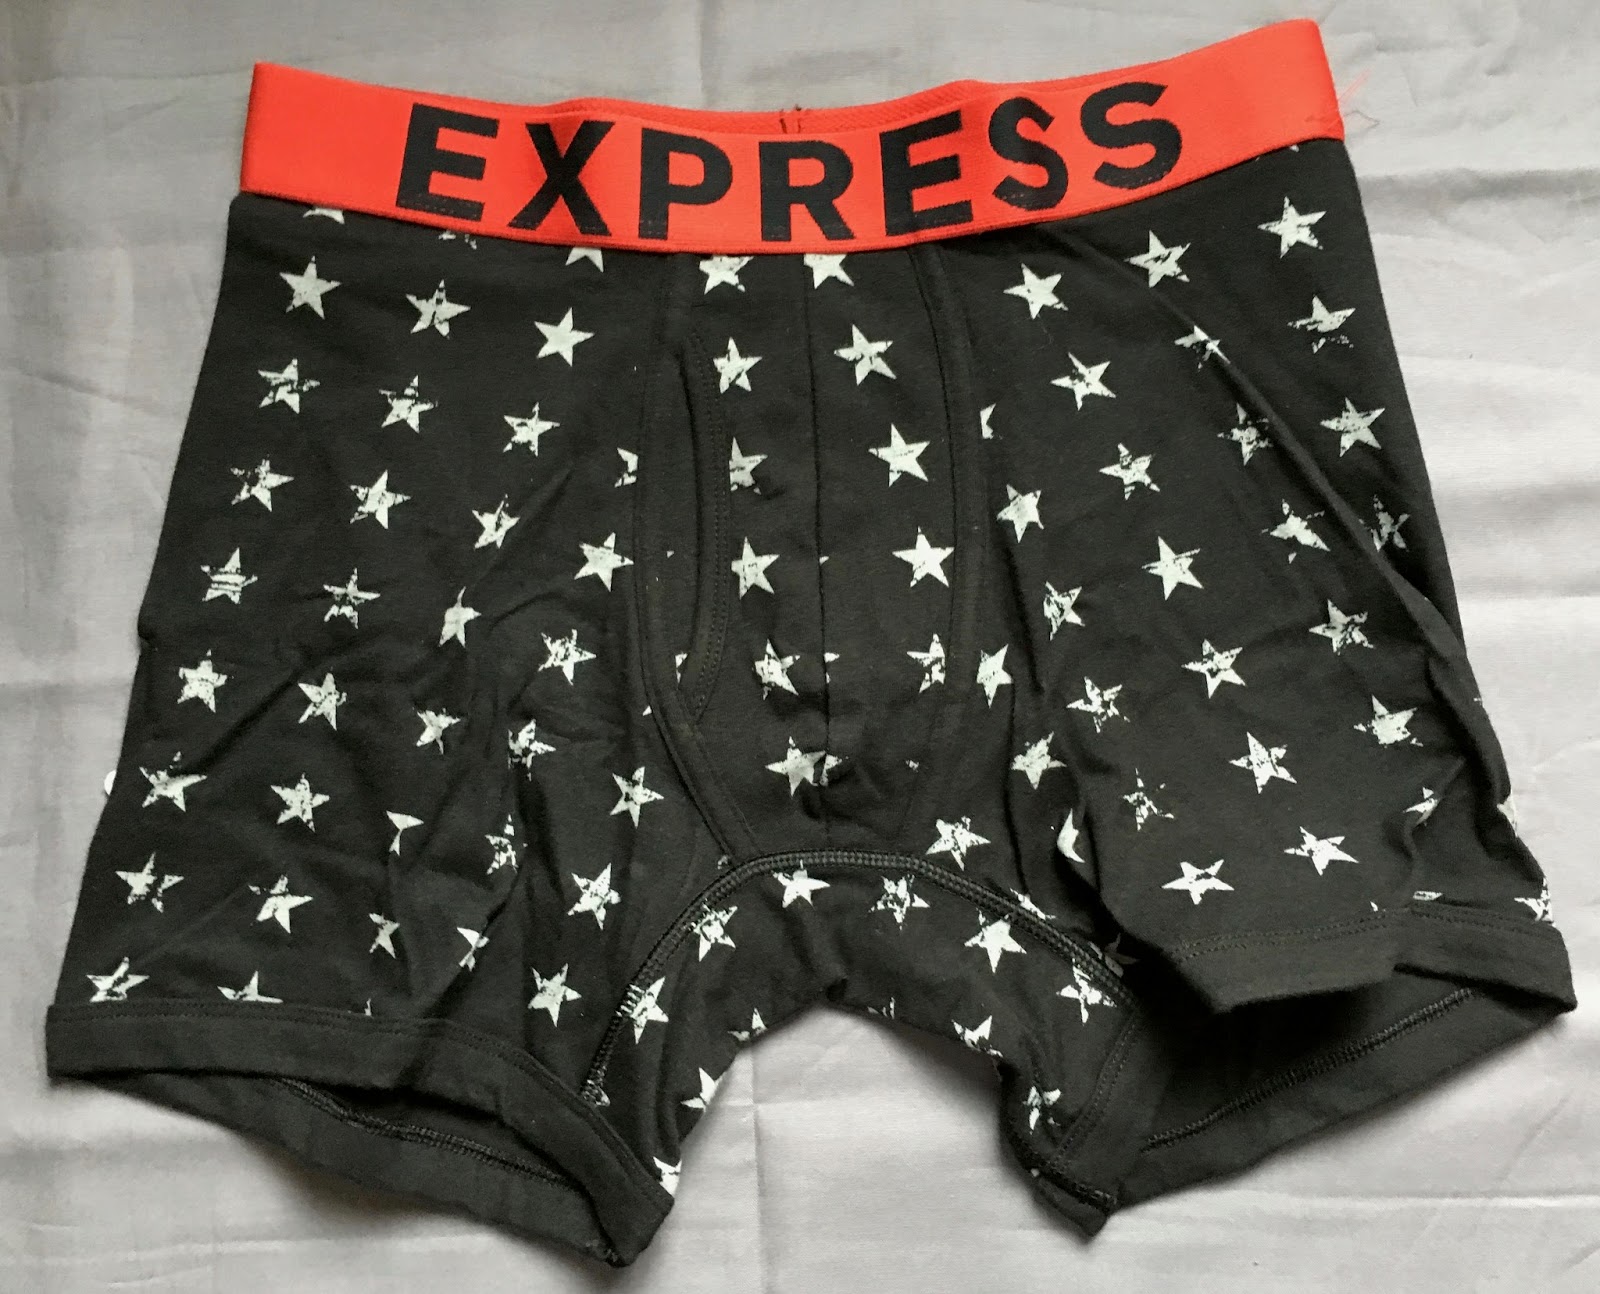 Well-Endowed Underwear Review: Express Vintage Star Print Boxer Briefs